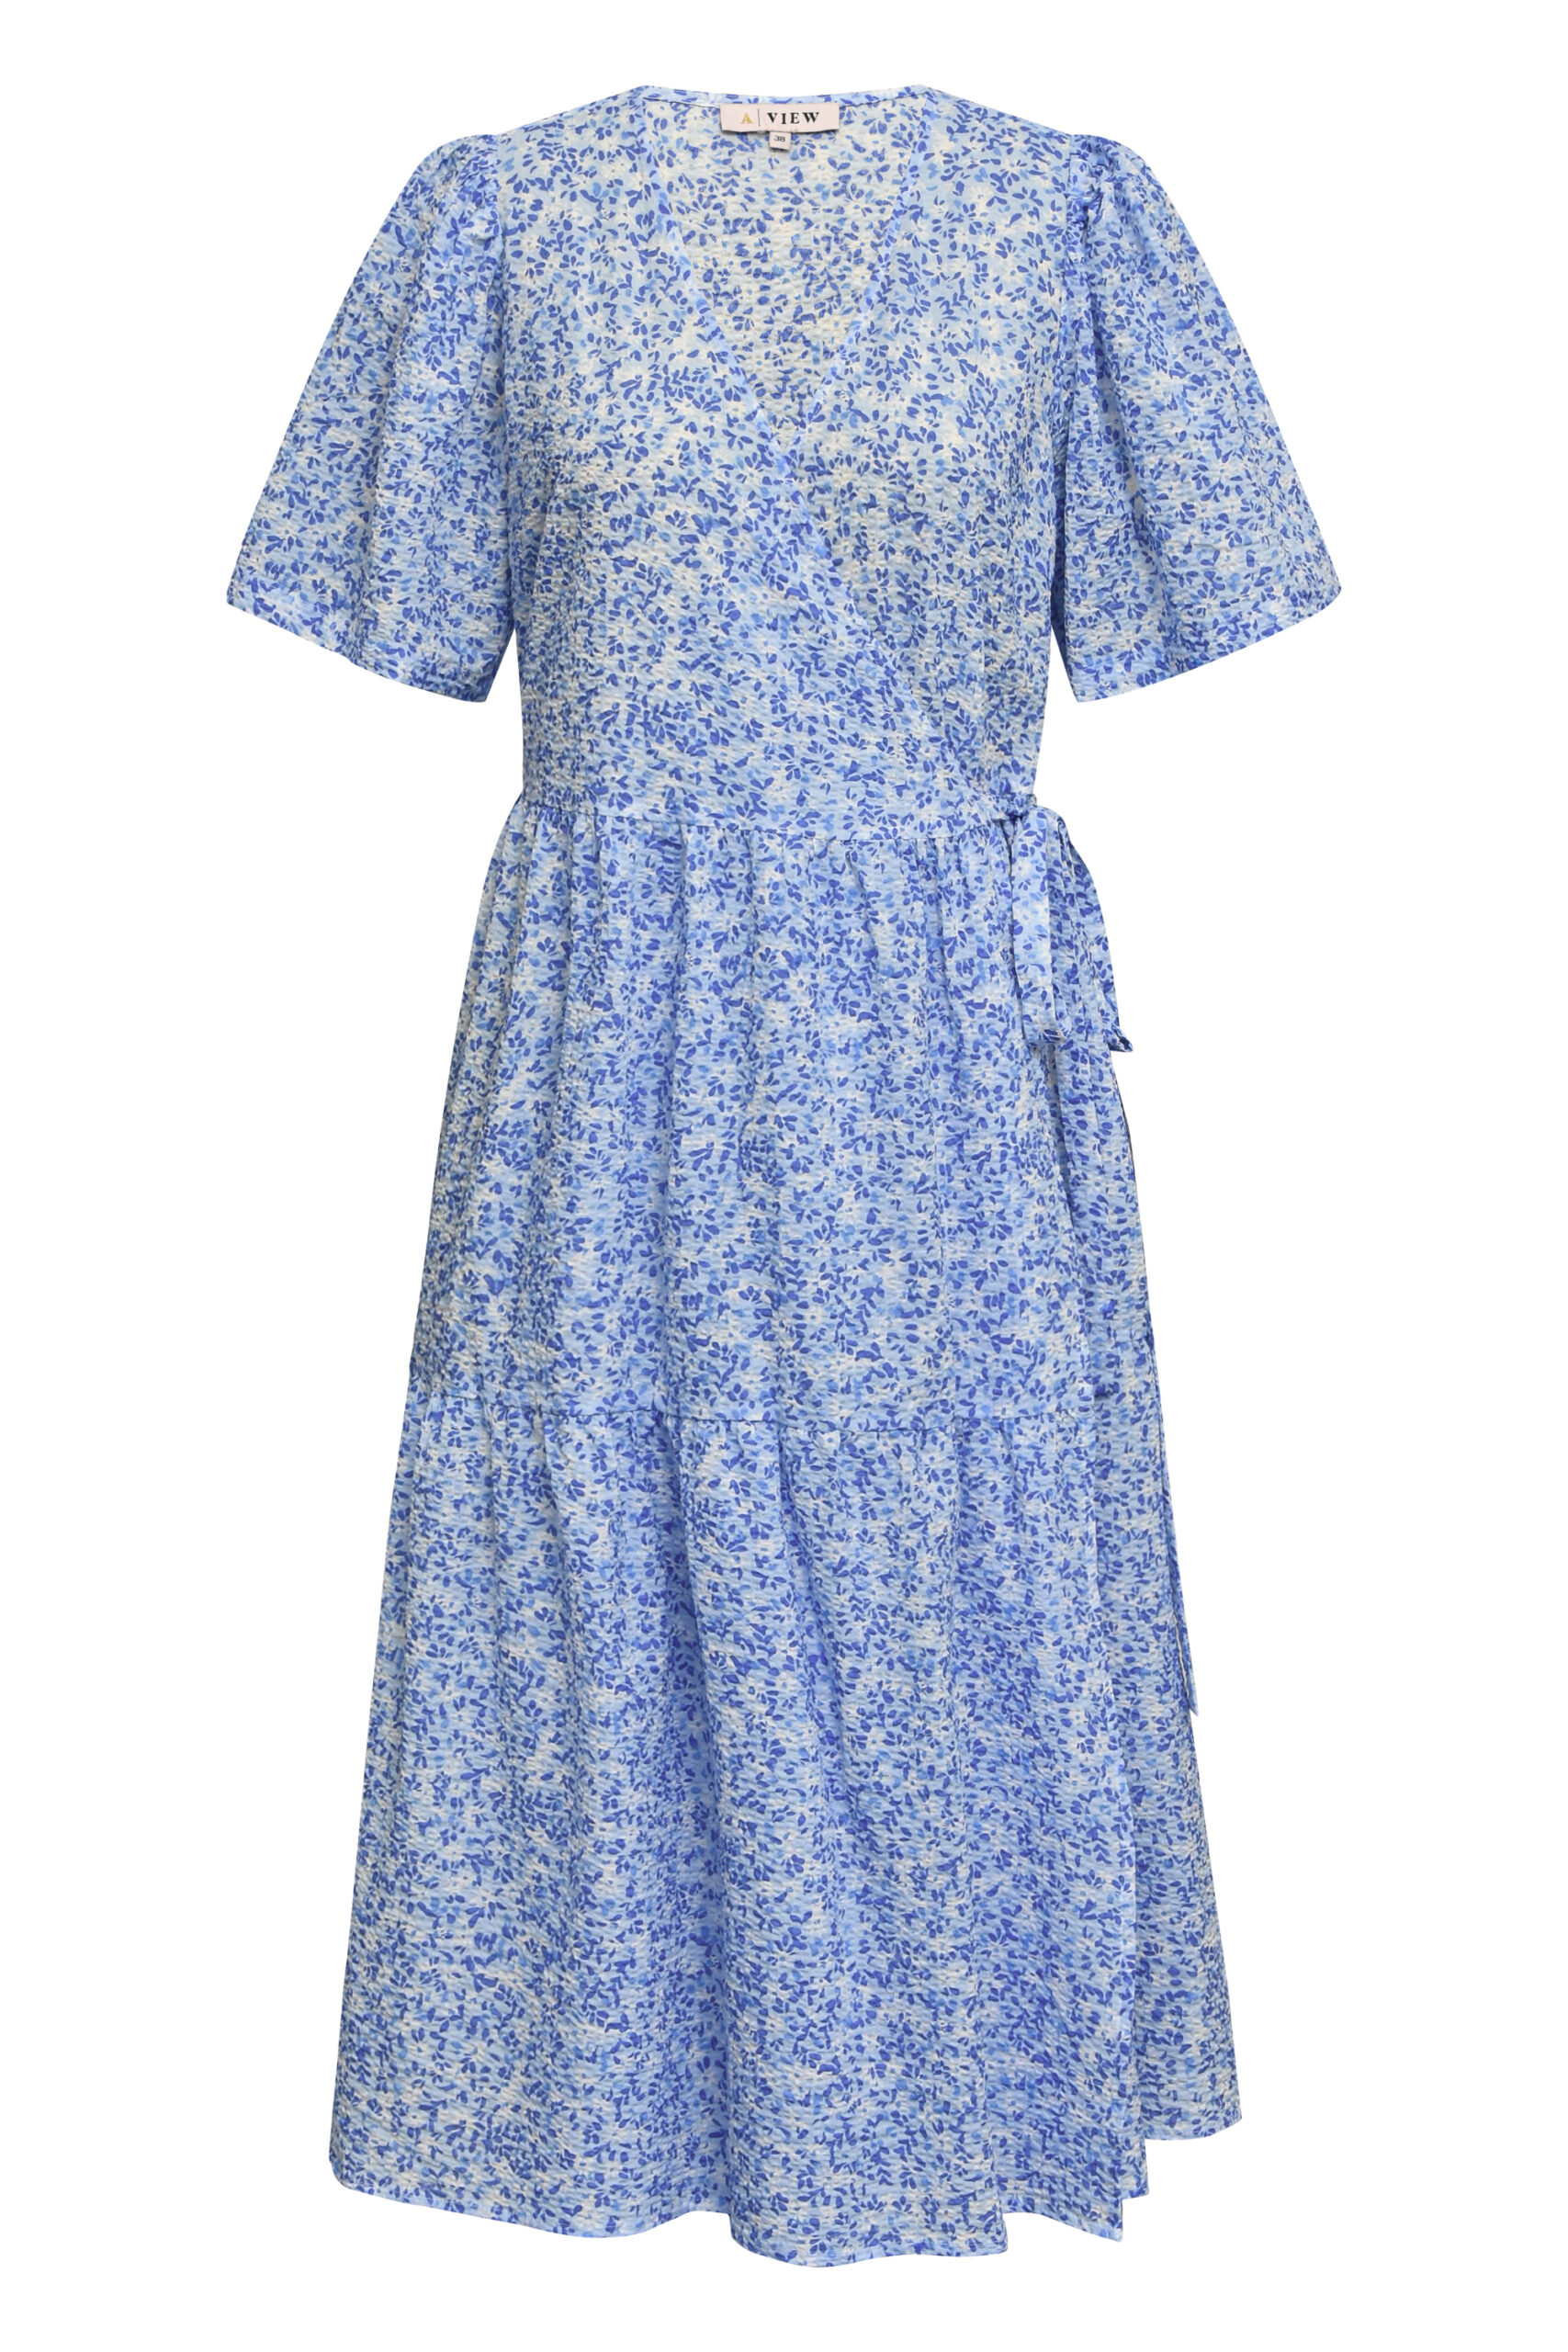 Caisa Blue Print Dress item front